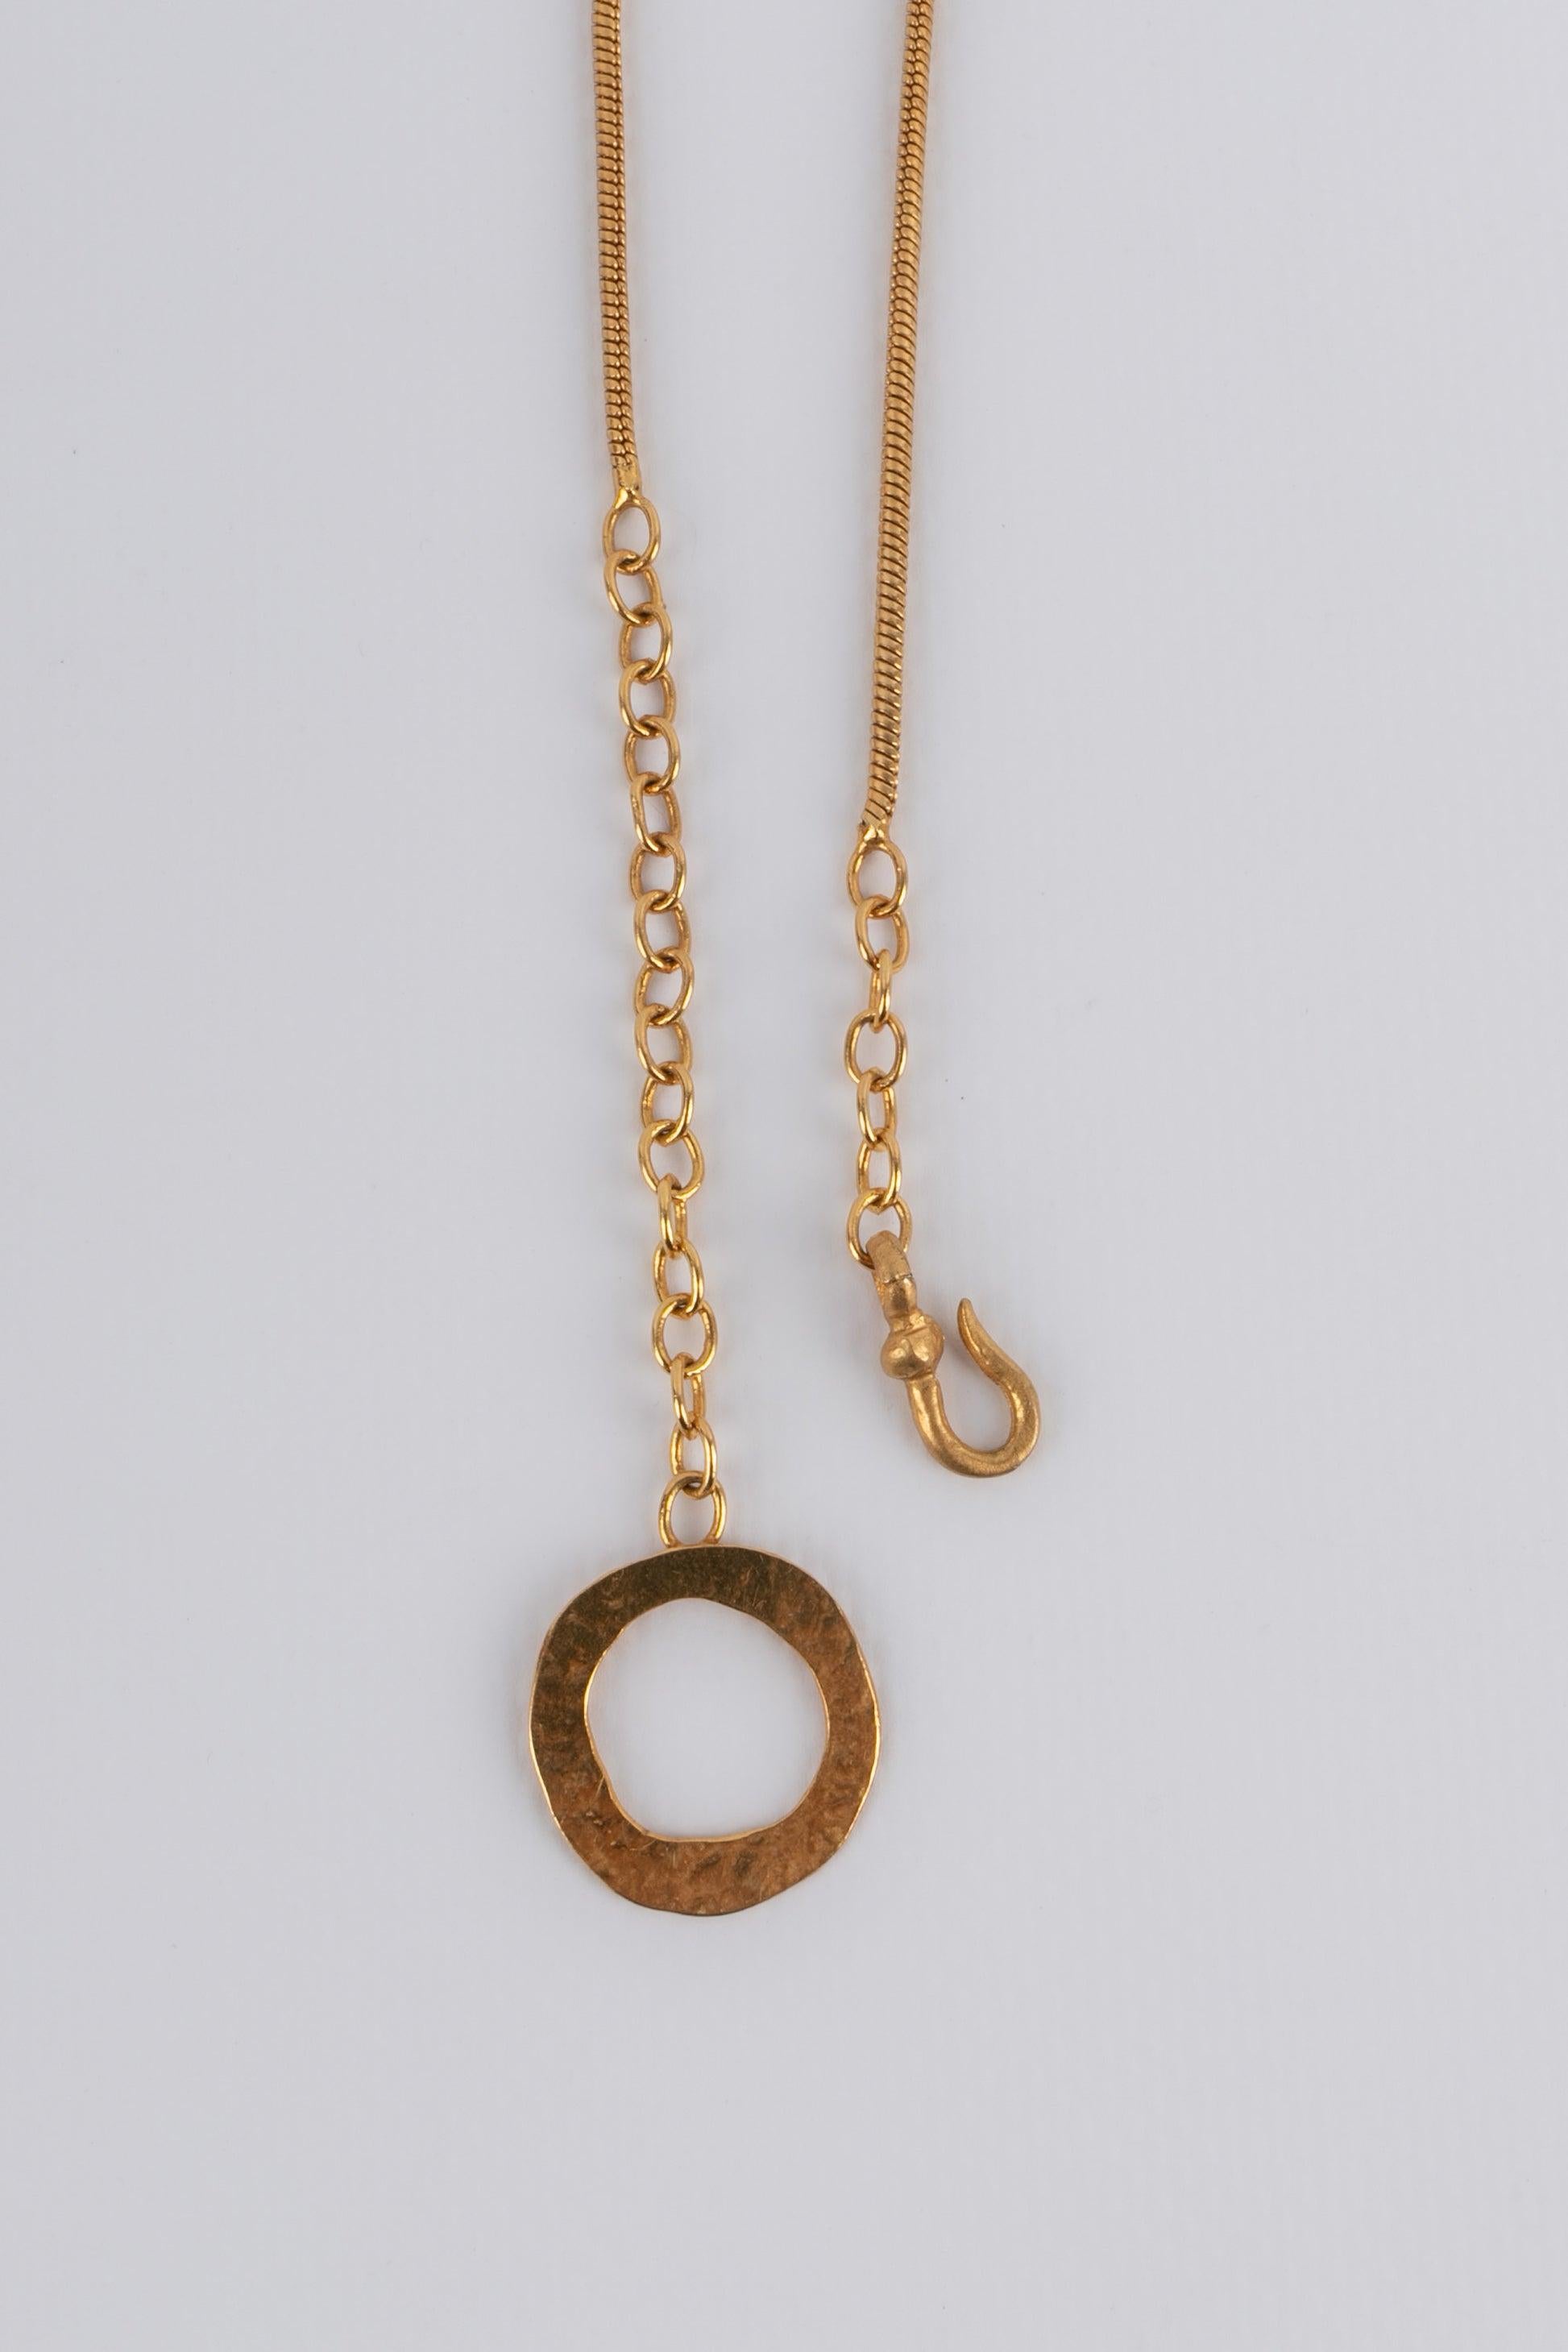 Van Der Straeten Golden Beaten Brass Necklace, 2000s For Sale 1